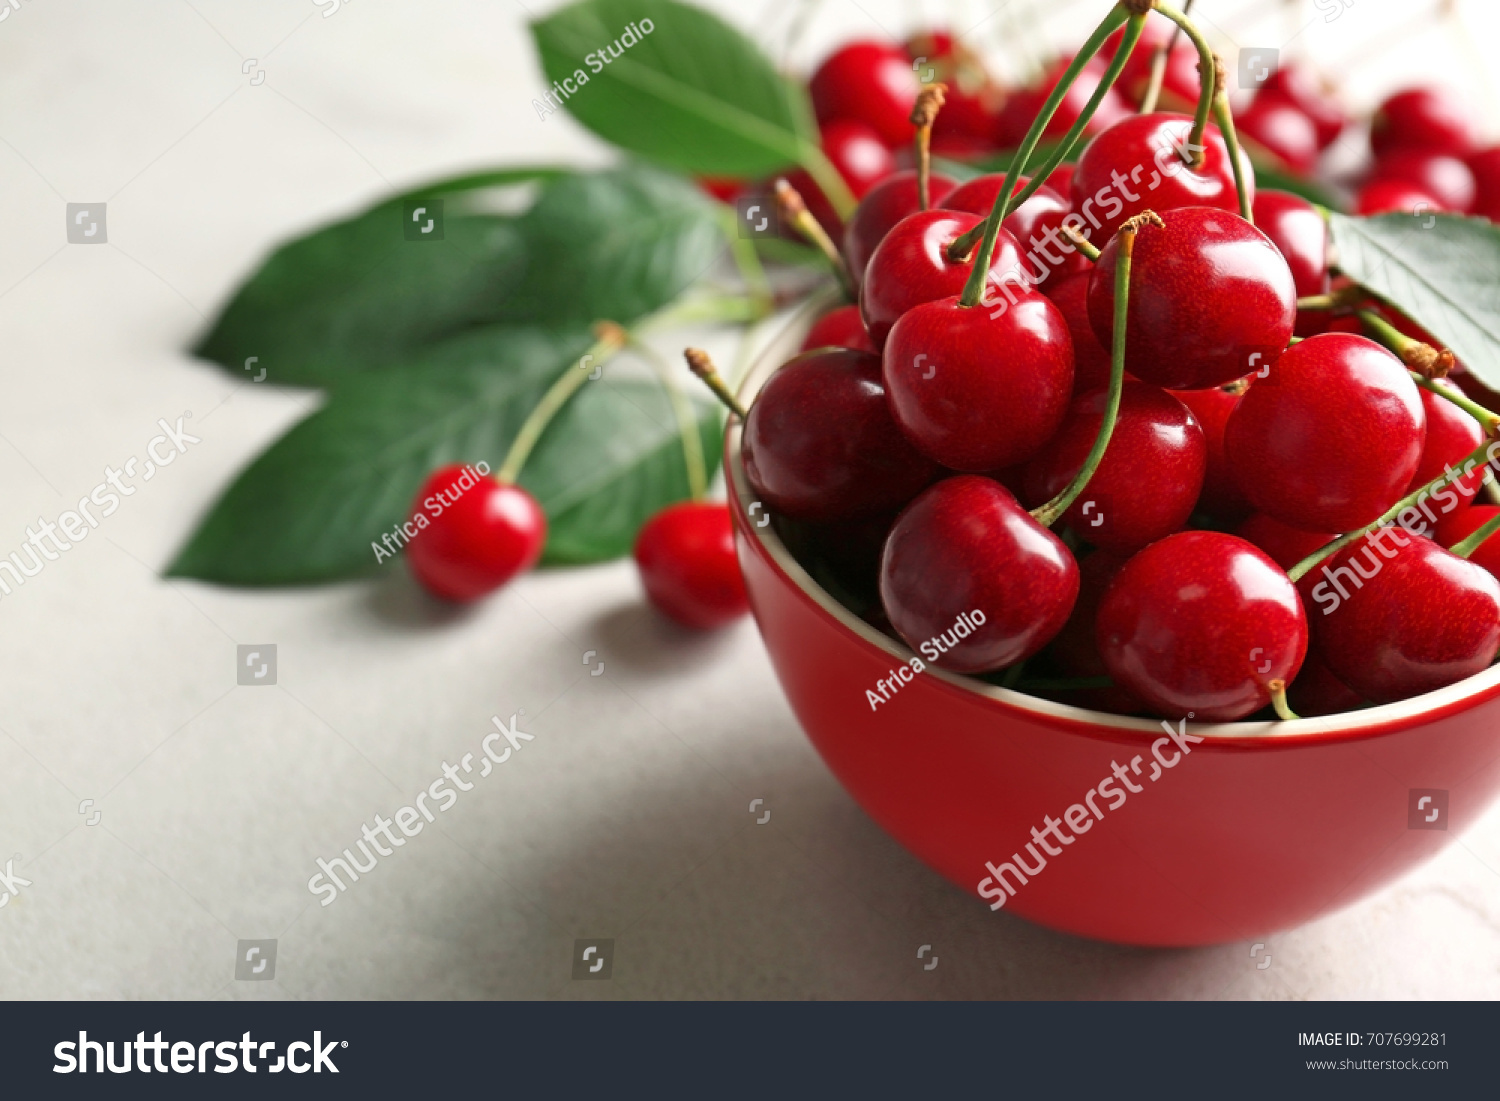 Ripe cherries in red ceramic bowl on light background #707699281